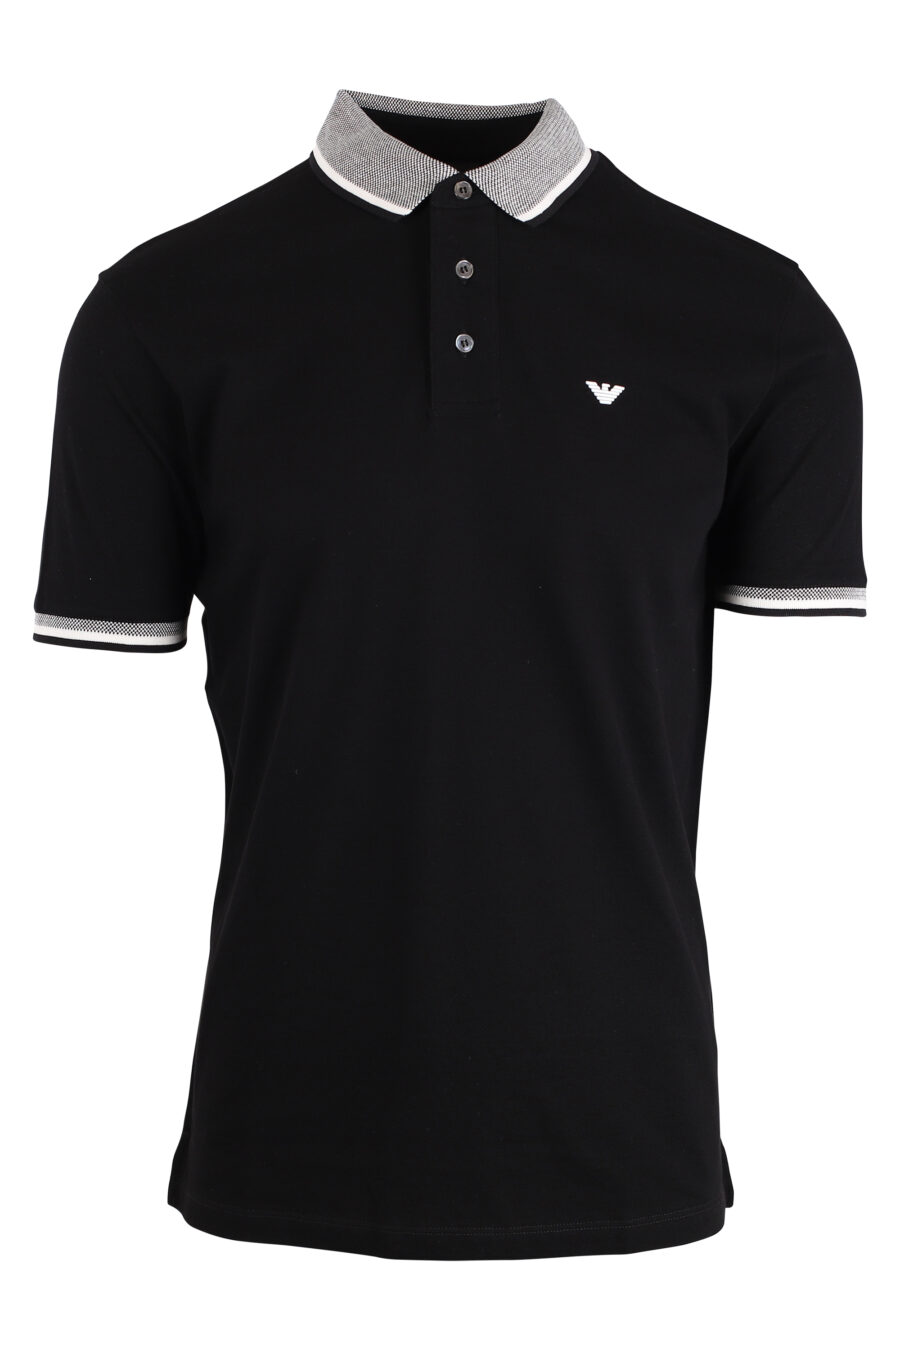 Black polo shirt with white eagle logo and white two-tone collar - IMG 4254